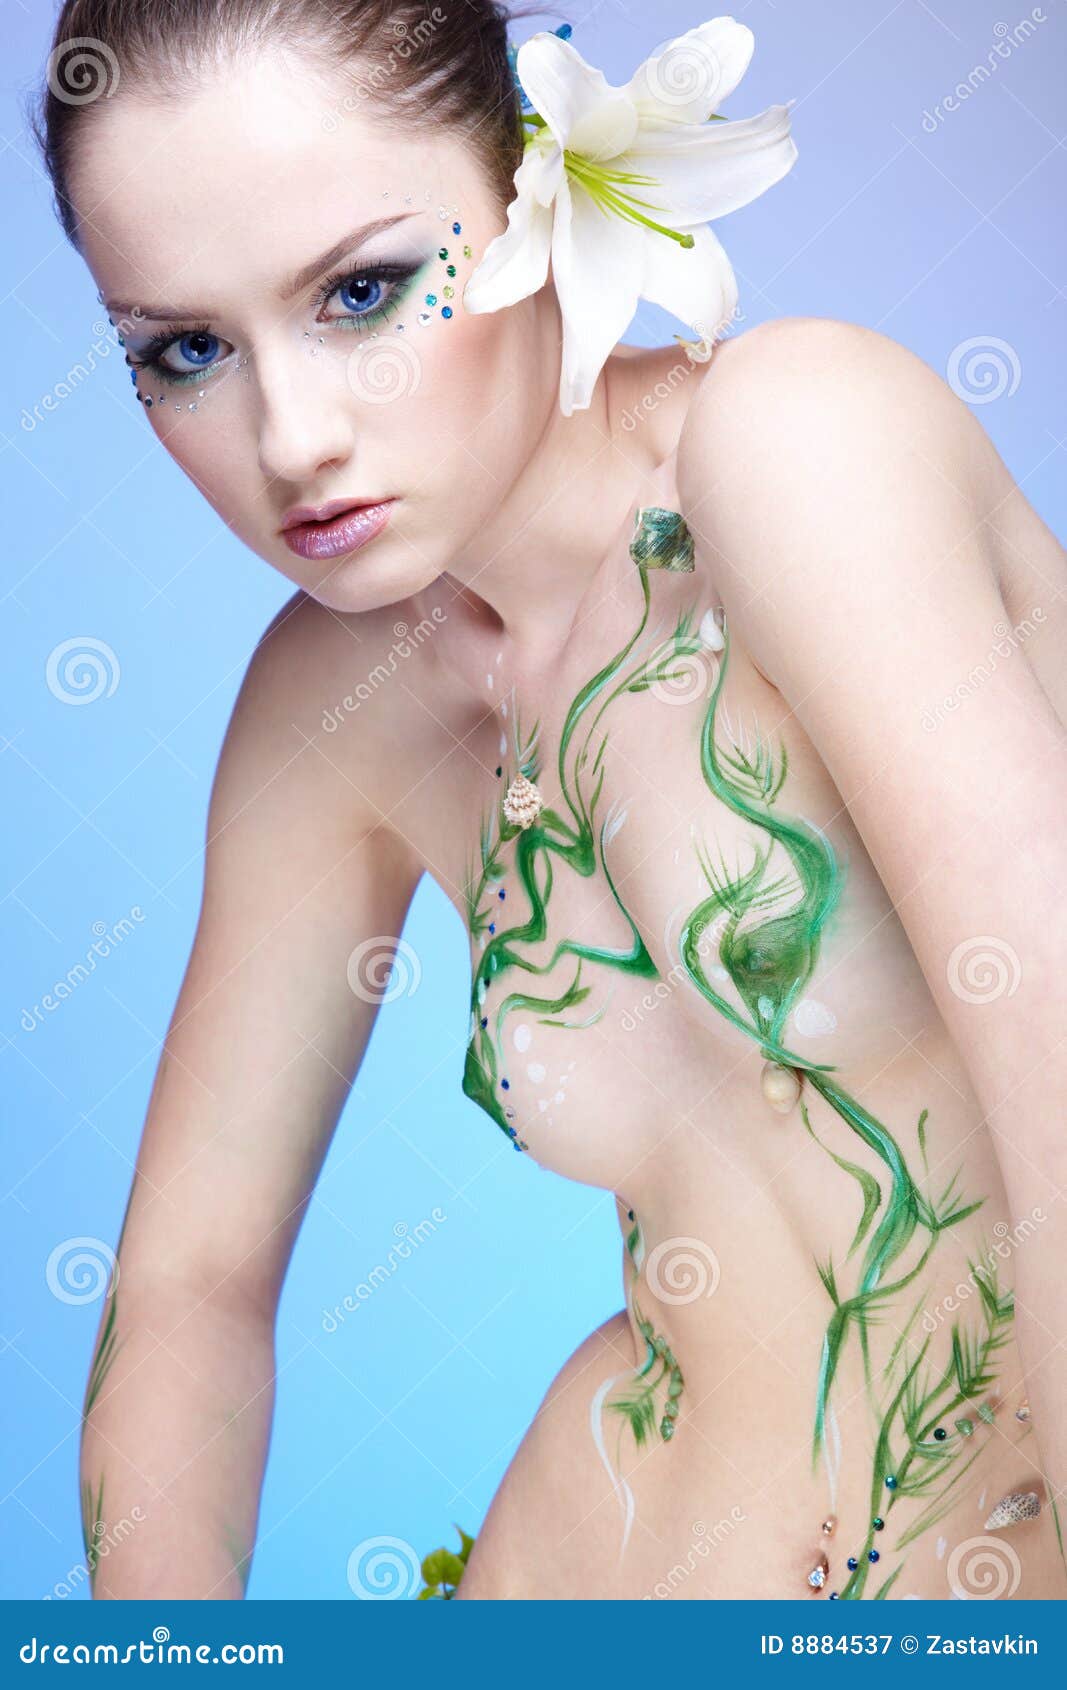 girl Naked mermaid